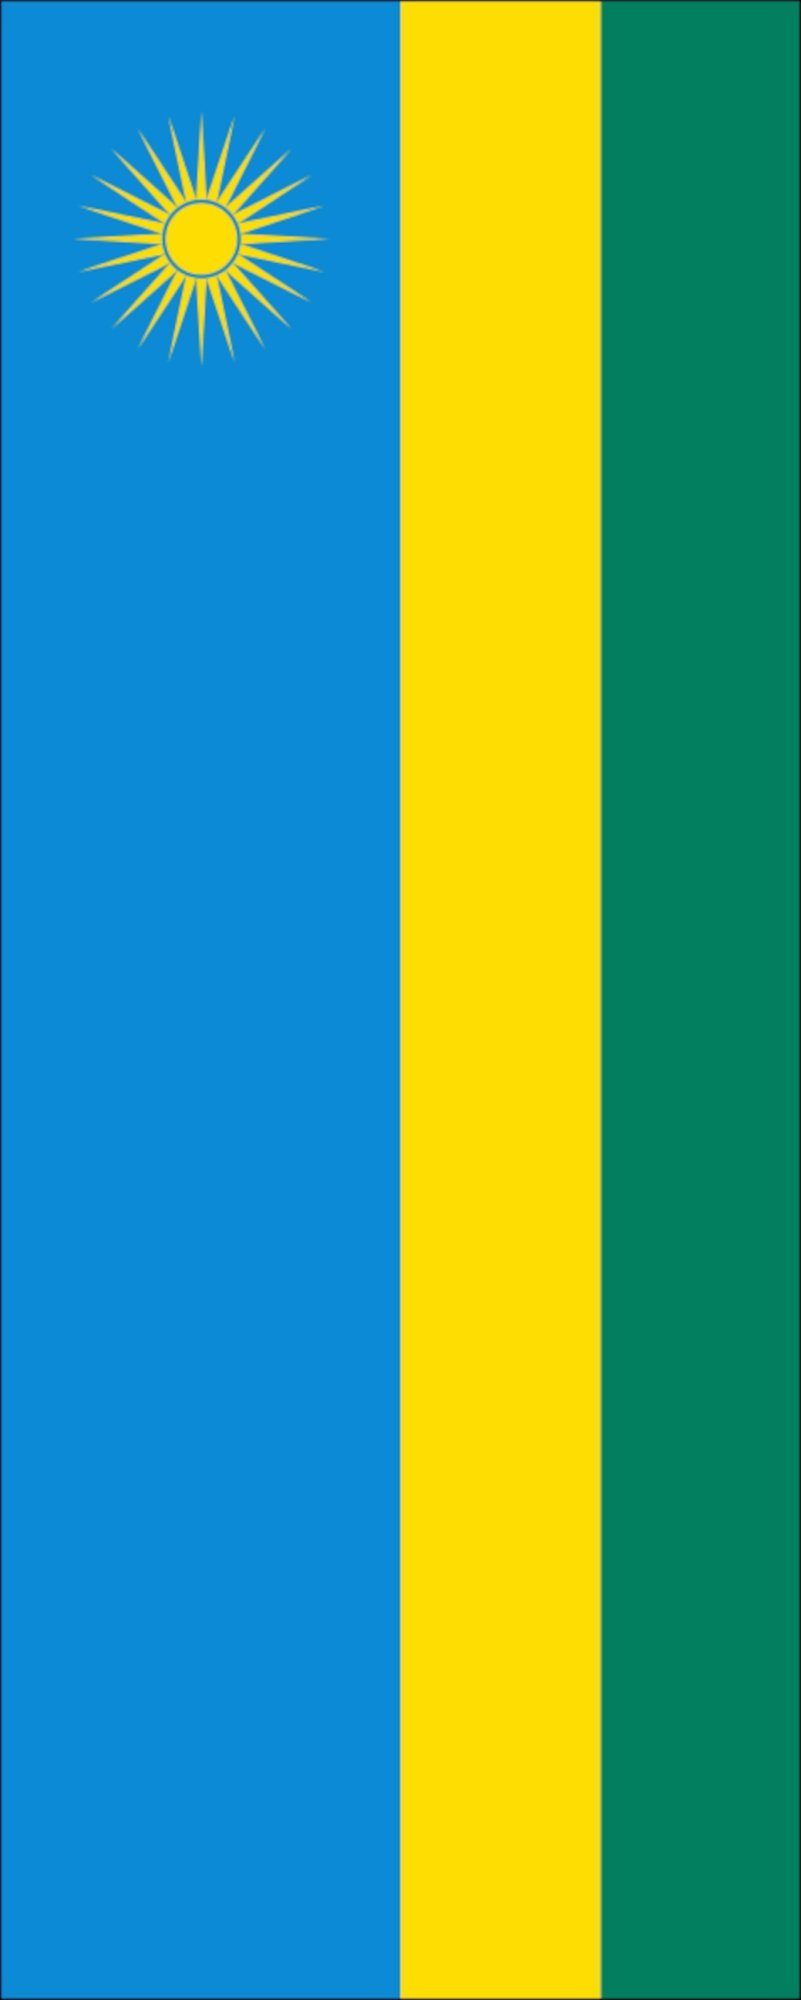 Ruanda flaggenmeer 110 Hochformat g/m² Flagge Flagge